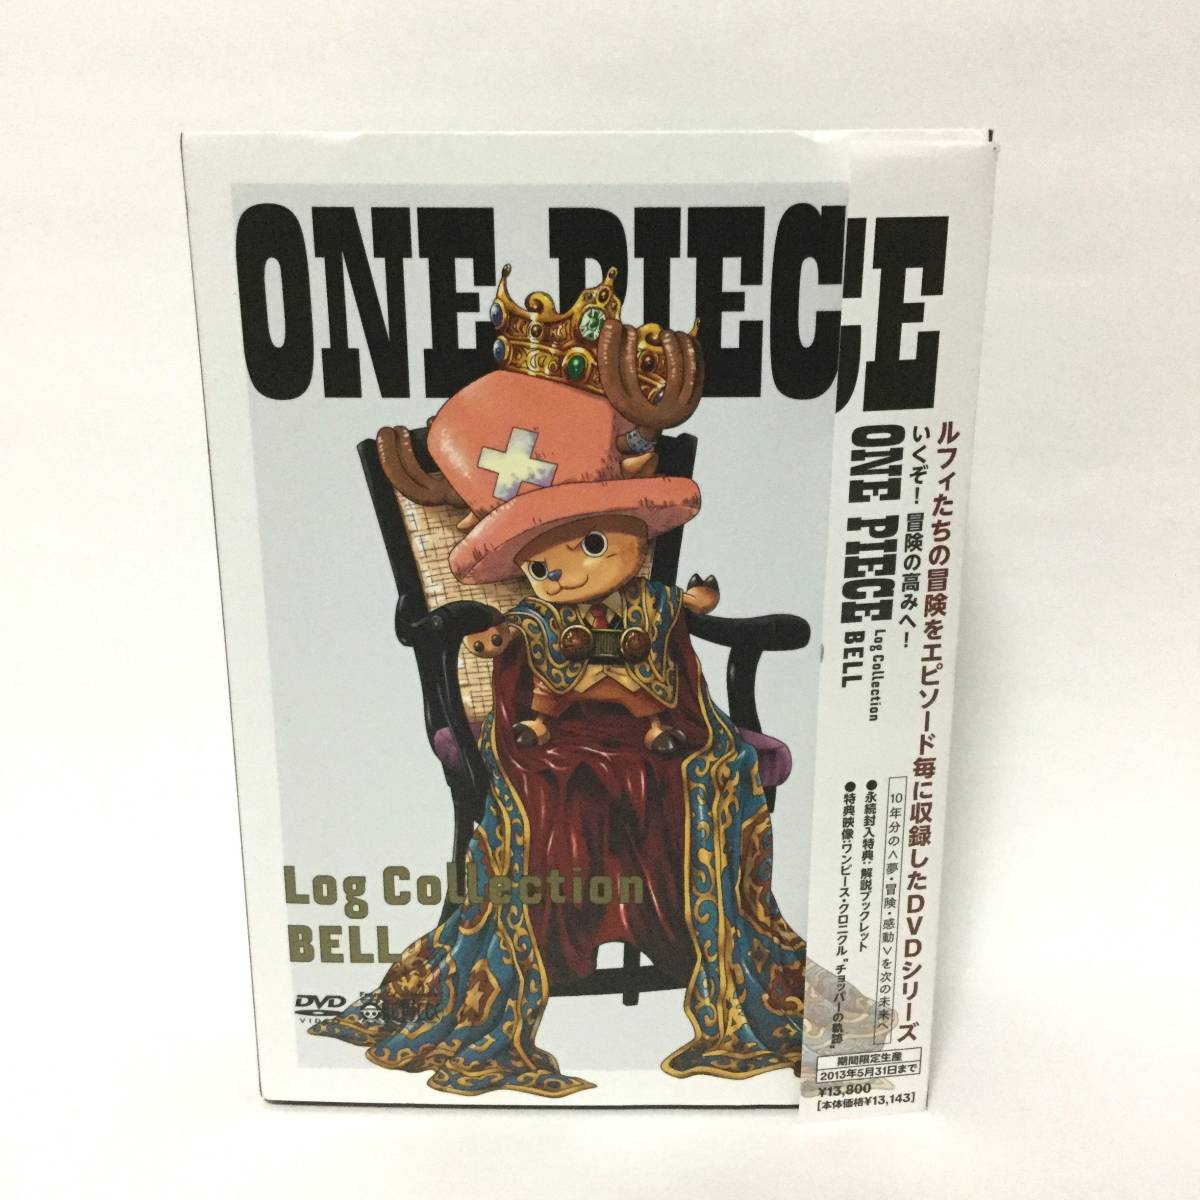 One Piece Log Collection Bell Dvd Box ワンピース ログコレクション 匿名配送 ルフィ 空島 エネル わ行 売買されたオークション情報 Yahooの商品情報をアーカイブ公開 オークファン Aucfan Com